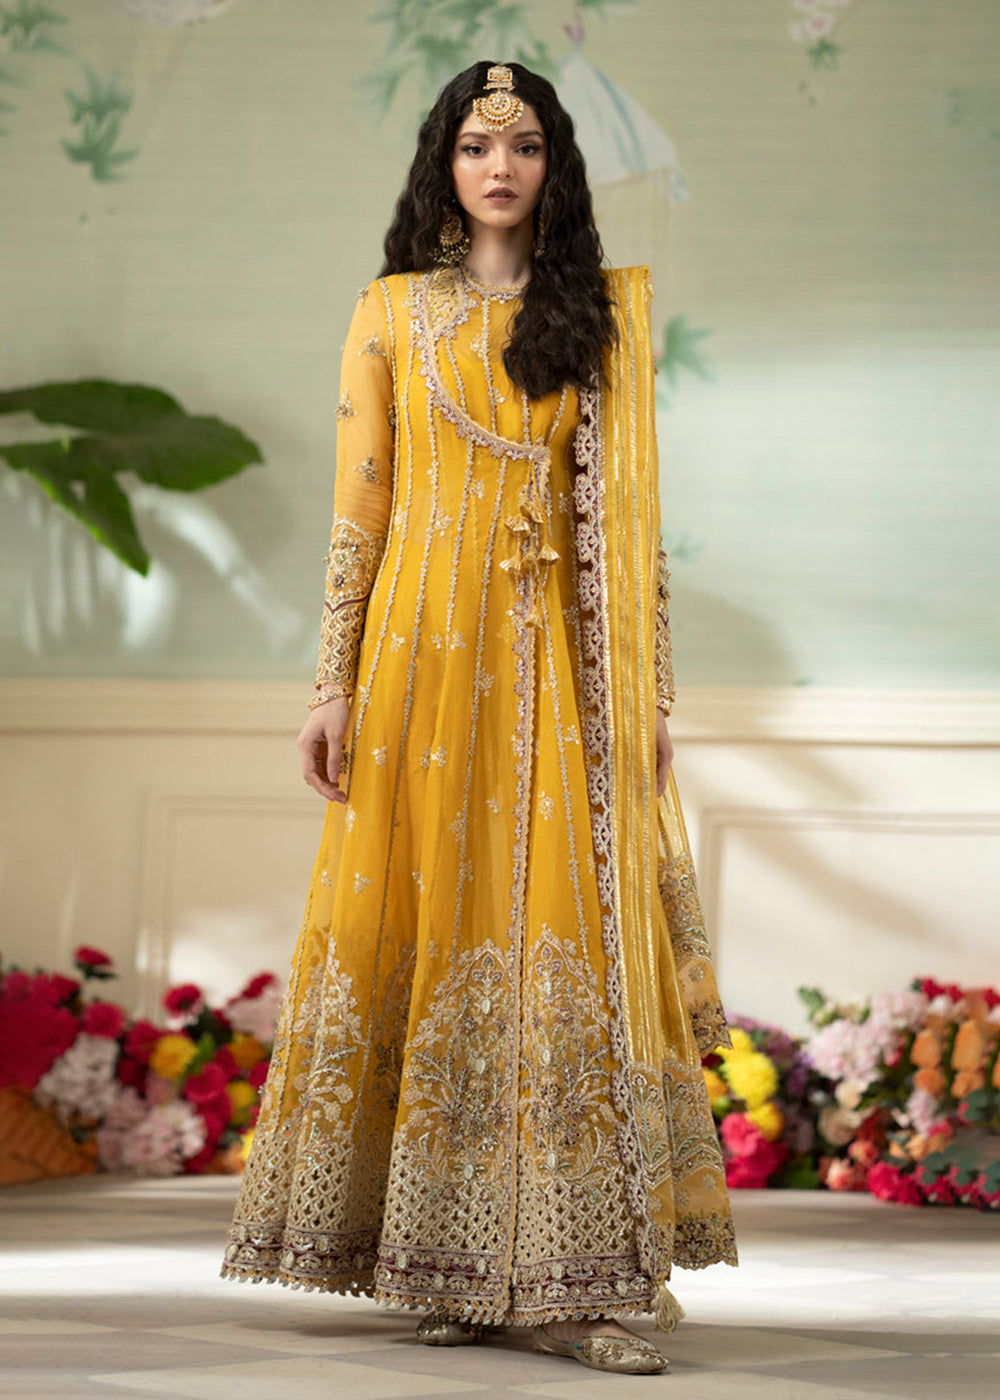 Buy Now Dilnaaz Wedding Formals 2023 by Qalamkar | DN-04 - KANZA Online in USA, UK, Canada & Worldwide at Empress Clothing. 